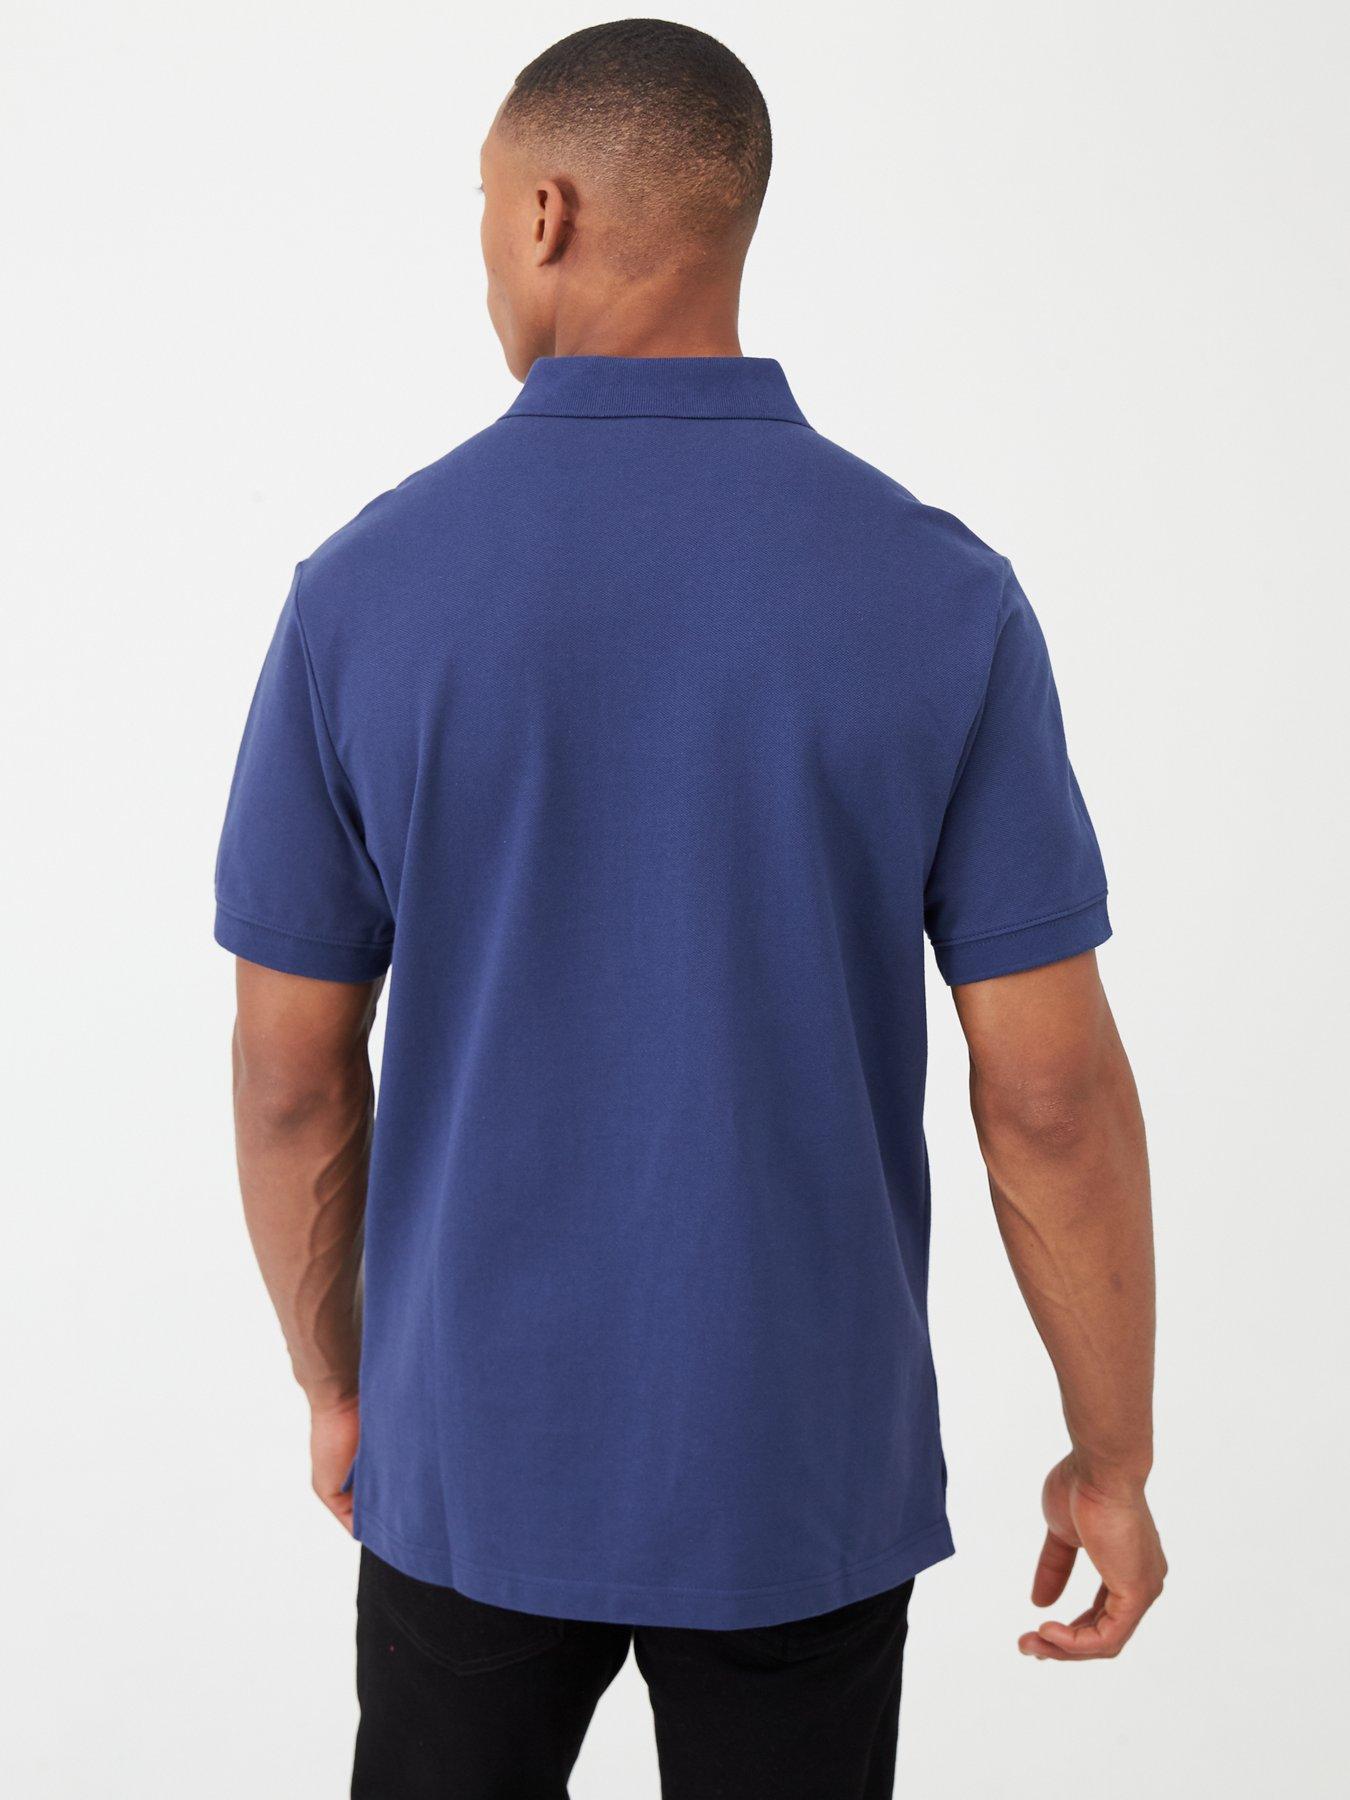 Nike Polo Shirt - Navy/White | littlewoods.com